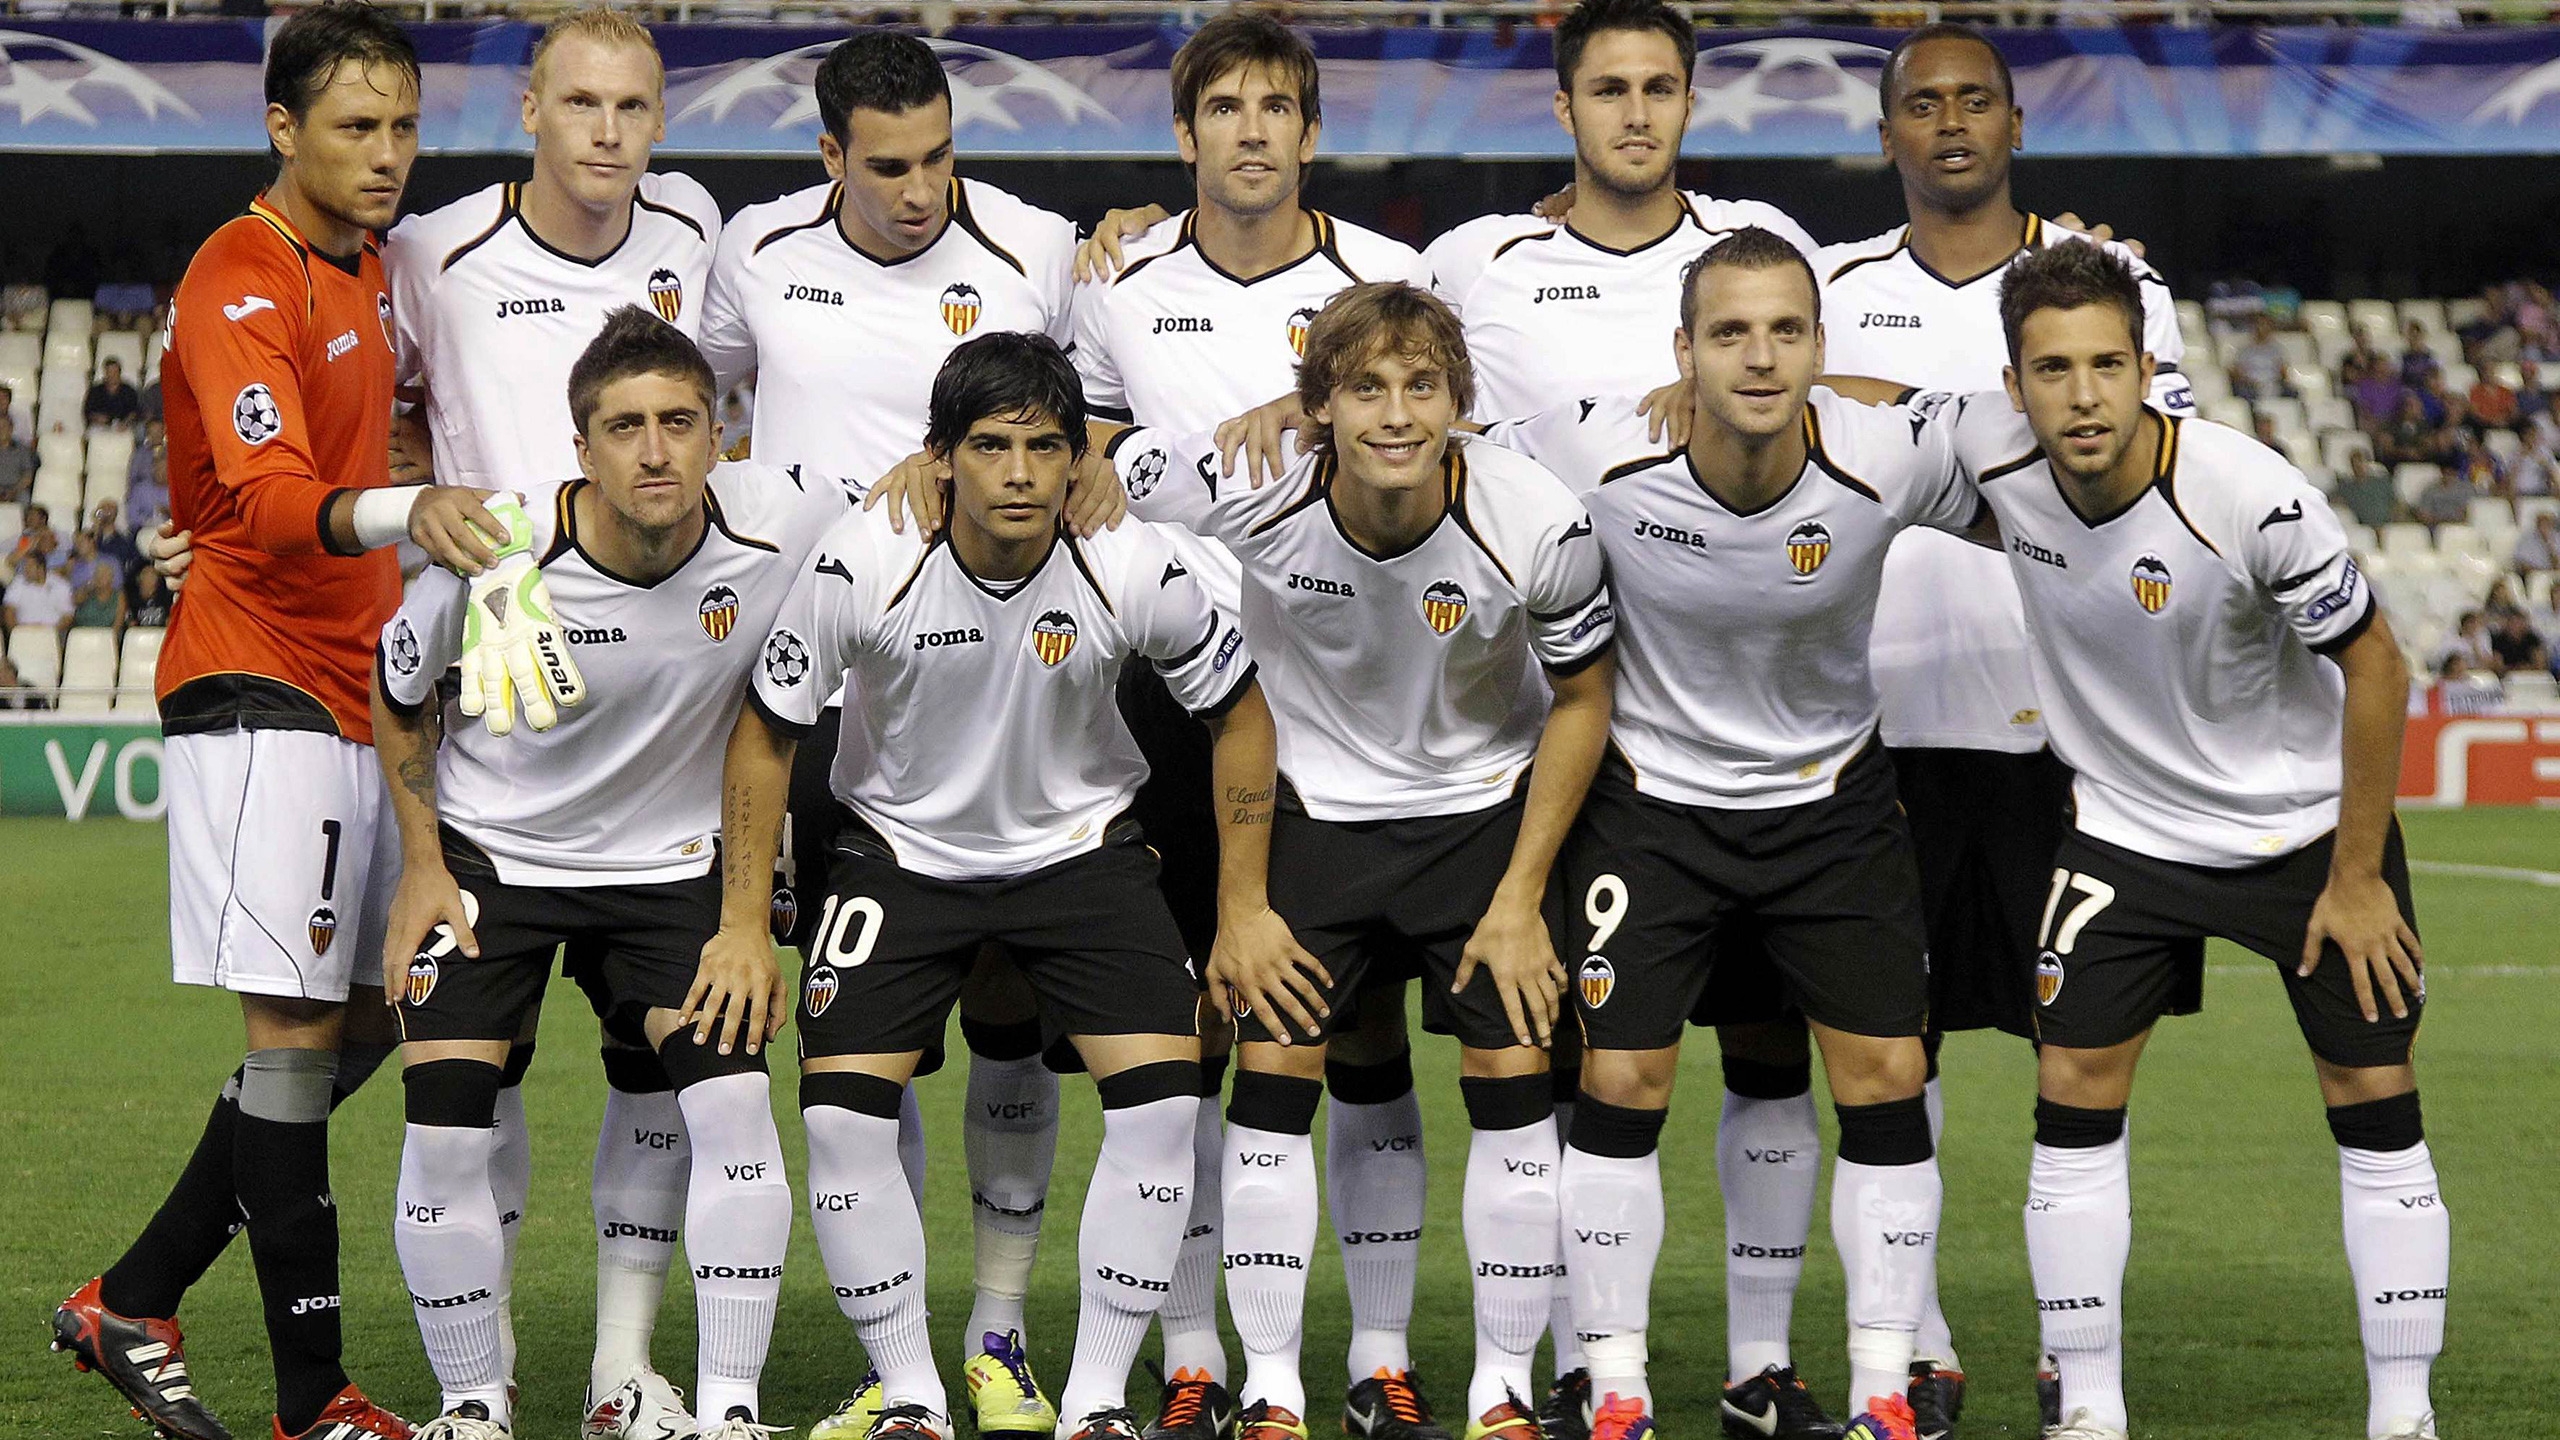 Valencia Football Team for 2560x1440 HDTV resolution